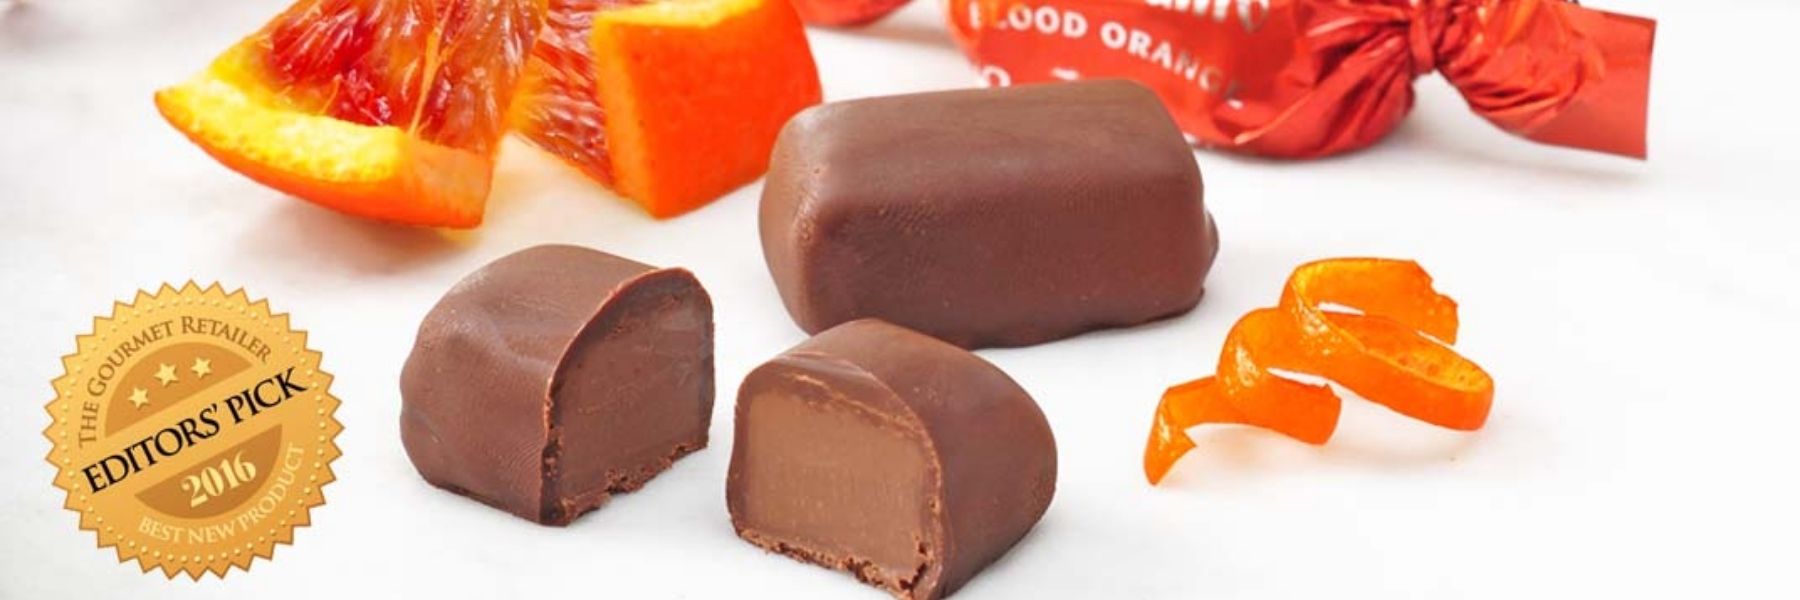 Dilettante Chocolates Blood Orange TruffleCremes Named Best New Product 2016